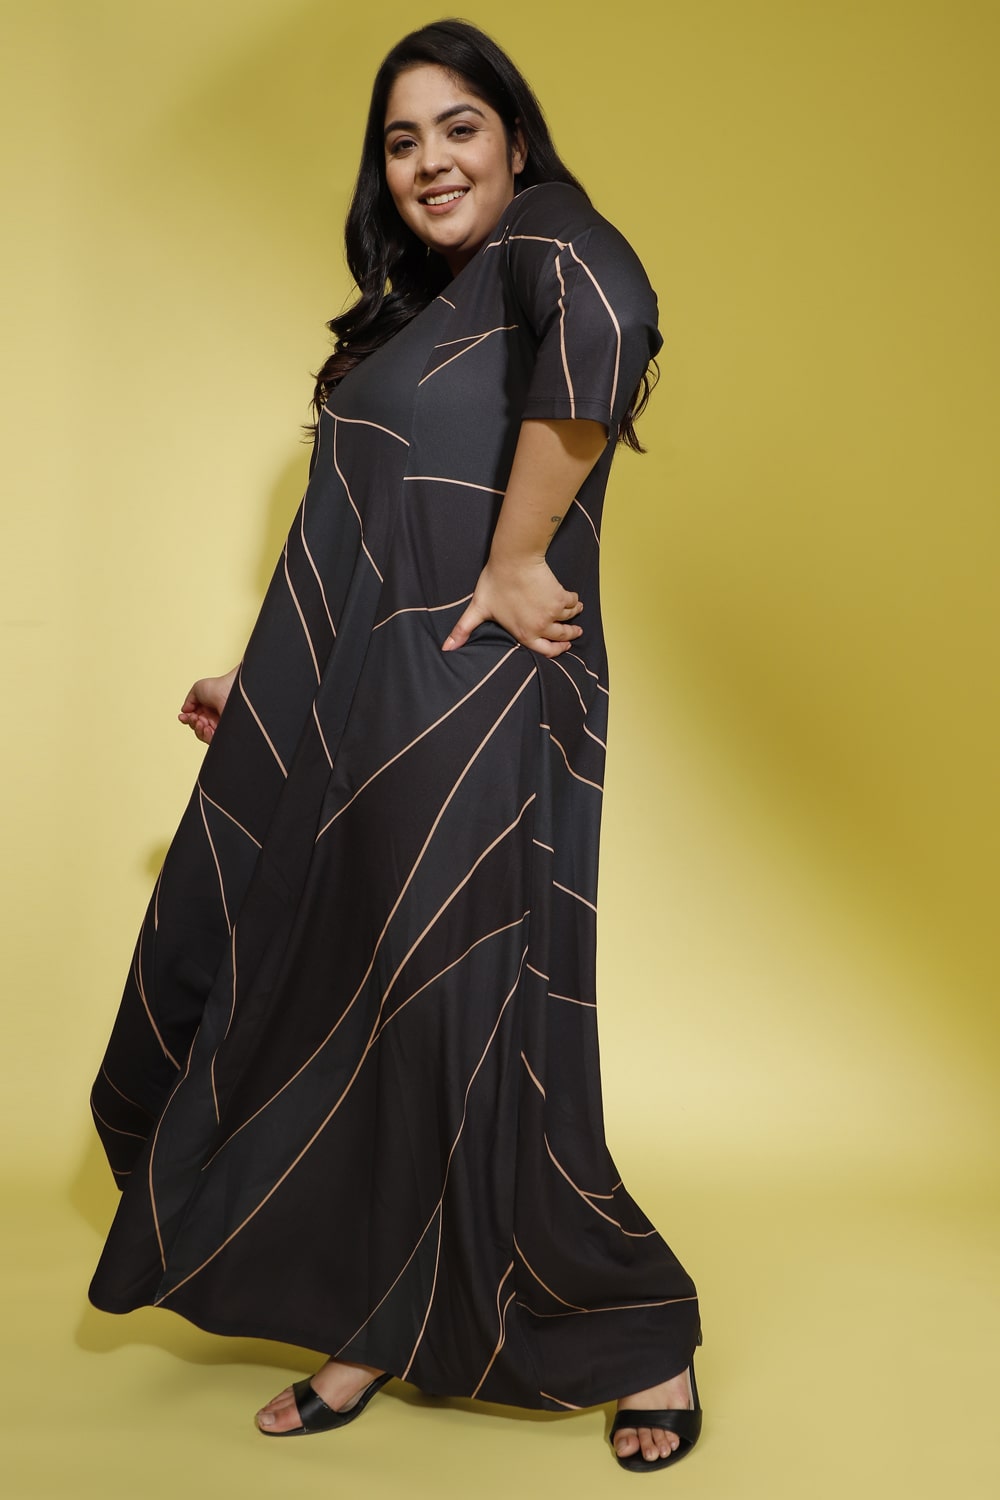 Teal-Black-Sculpted-Cocktail-Dress for Women